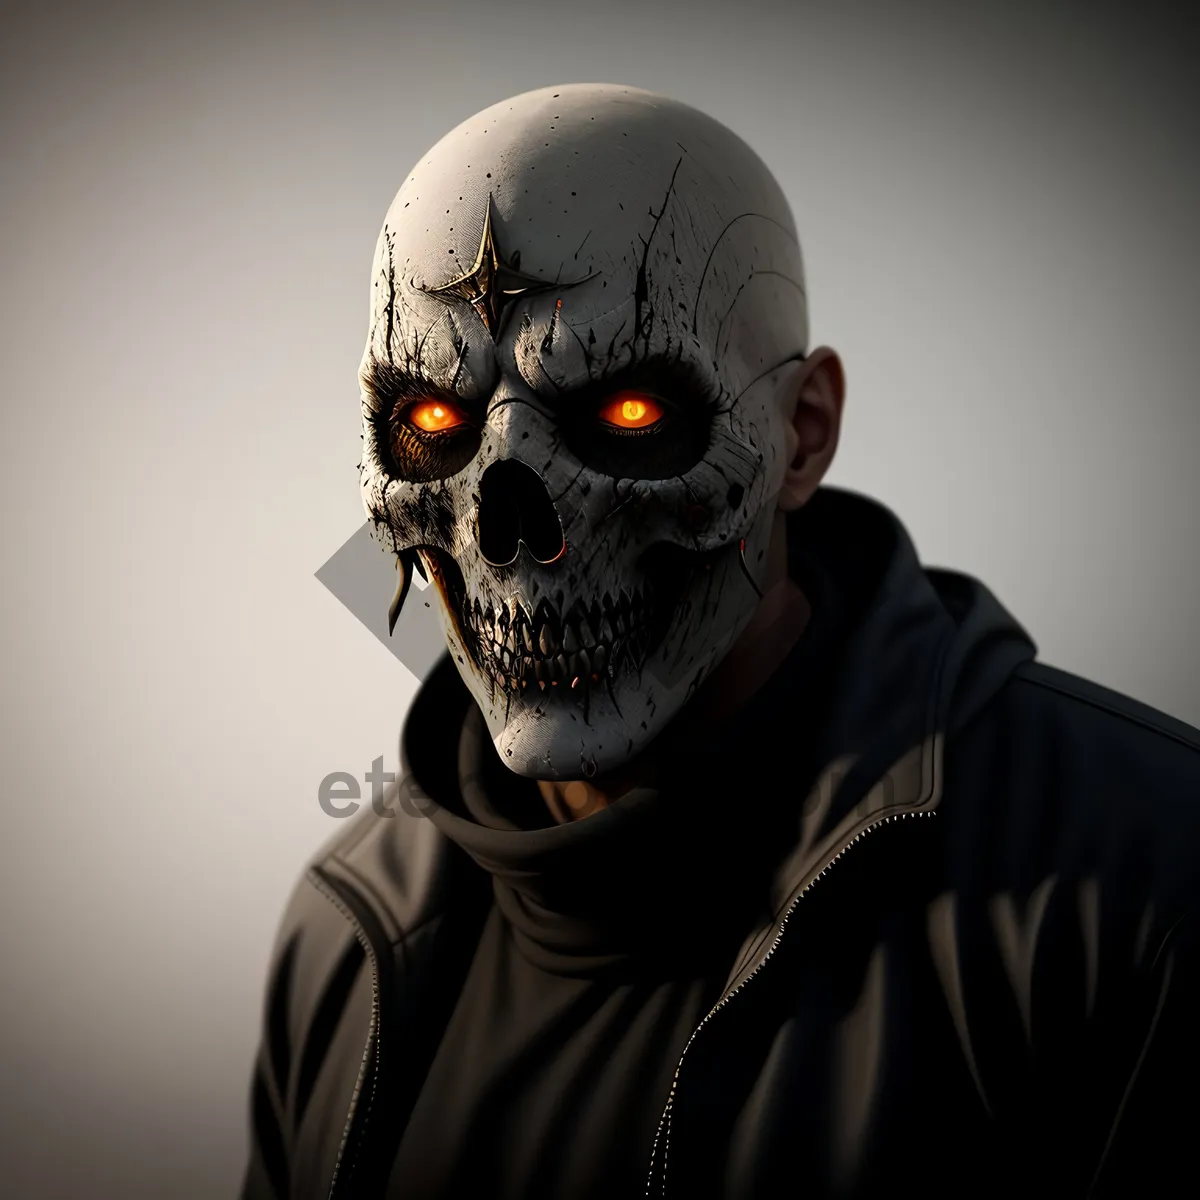 Picture of Sinister Skull Ski Mask: Men's Horror-themed Protective Face-Covering Attire